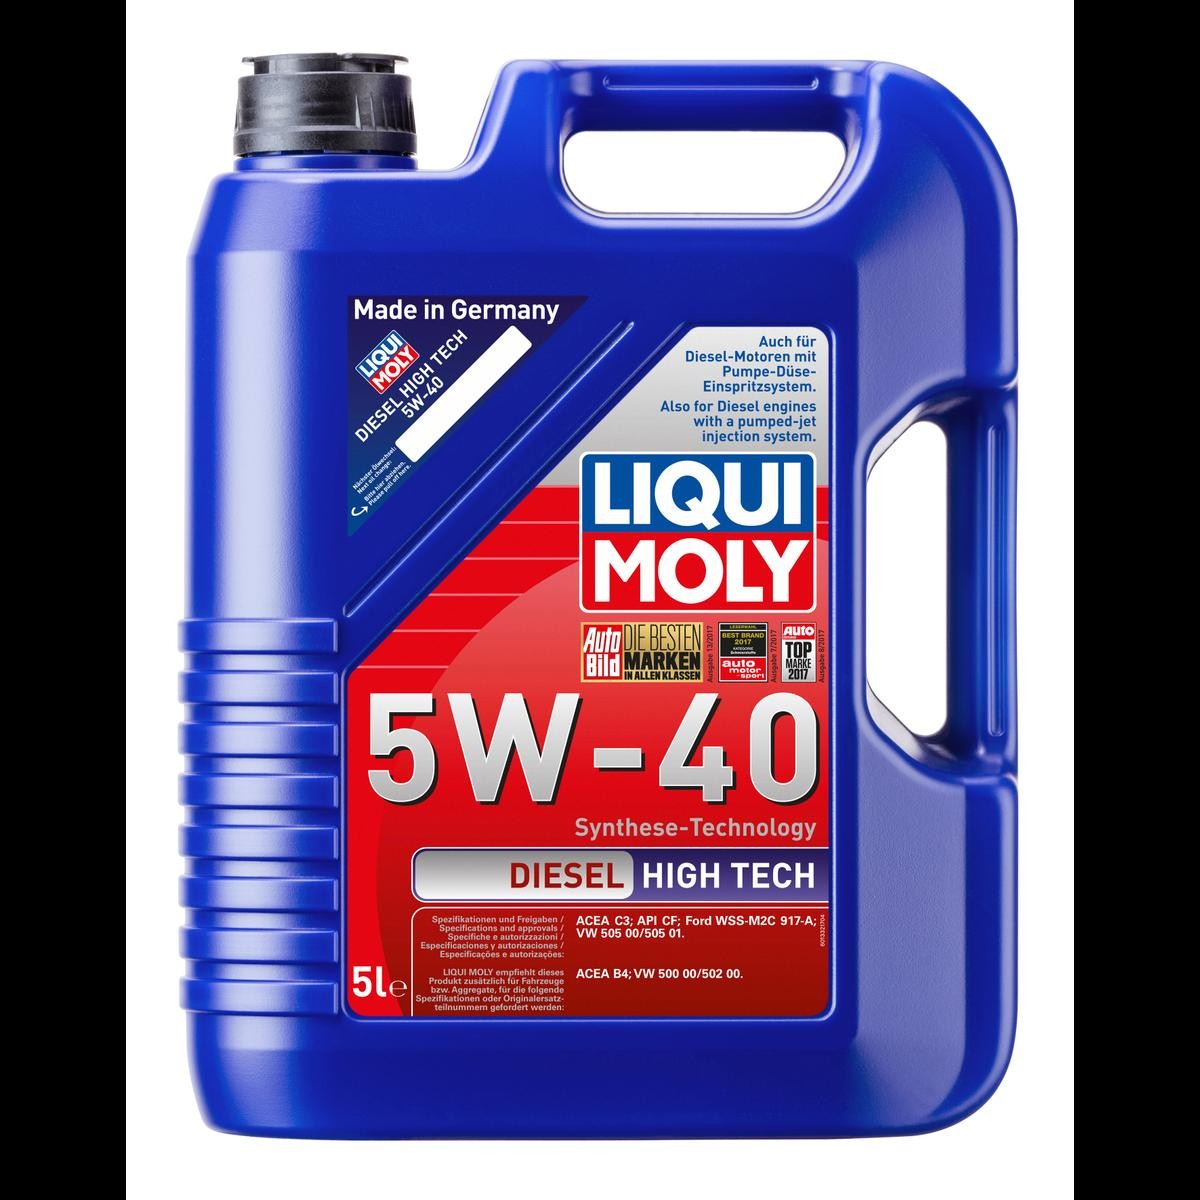 VW UP 121 Oils and fluids parts - Engine oil LIQUI MOLY 1332